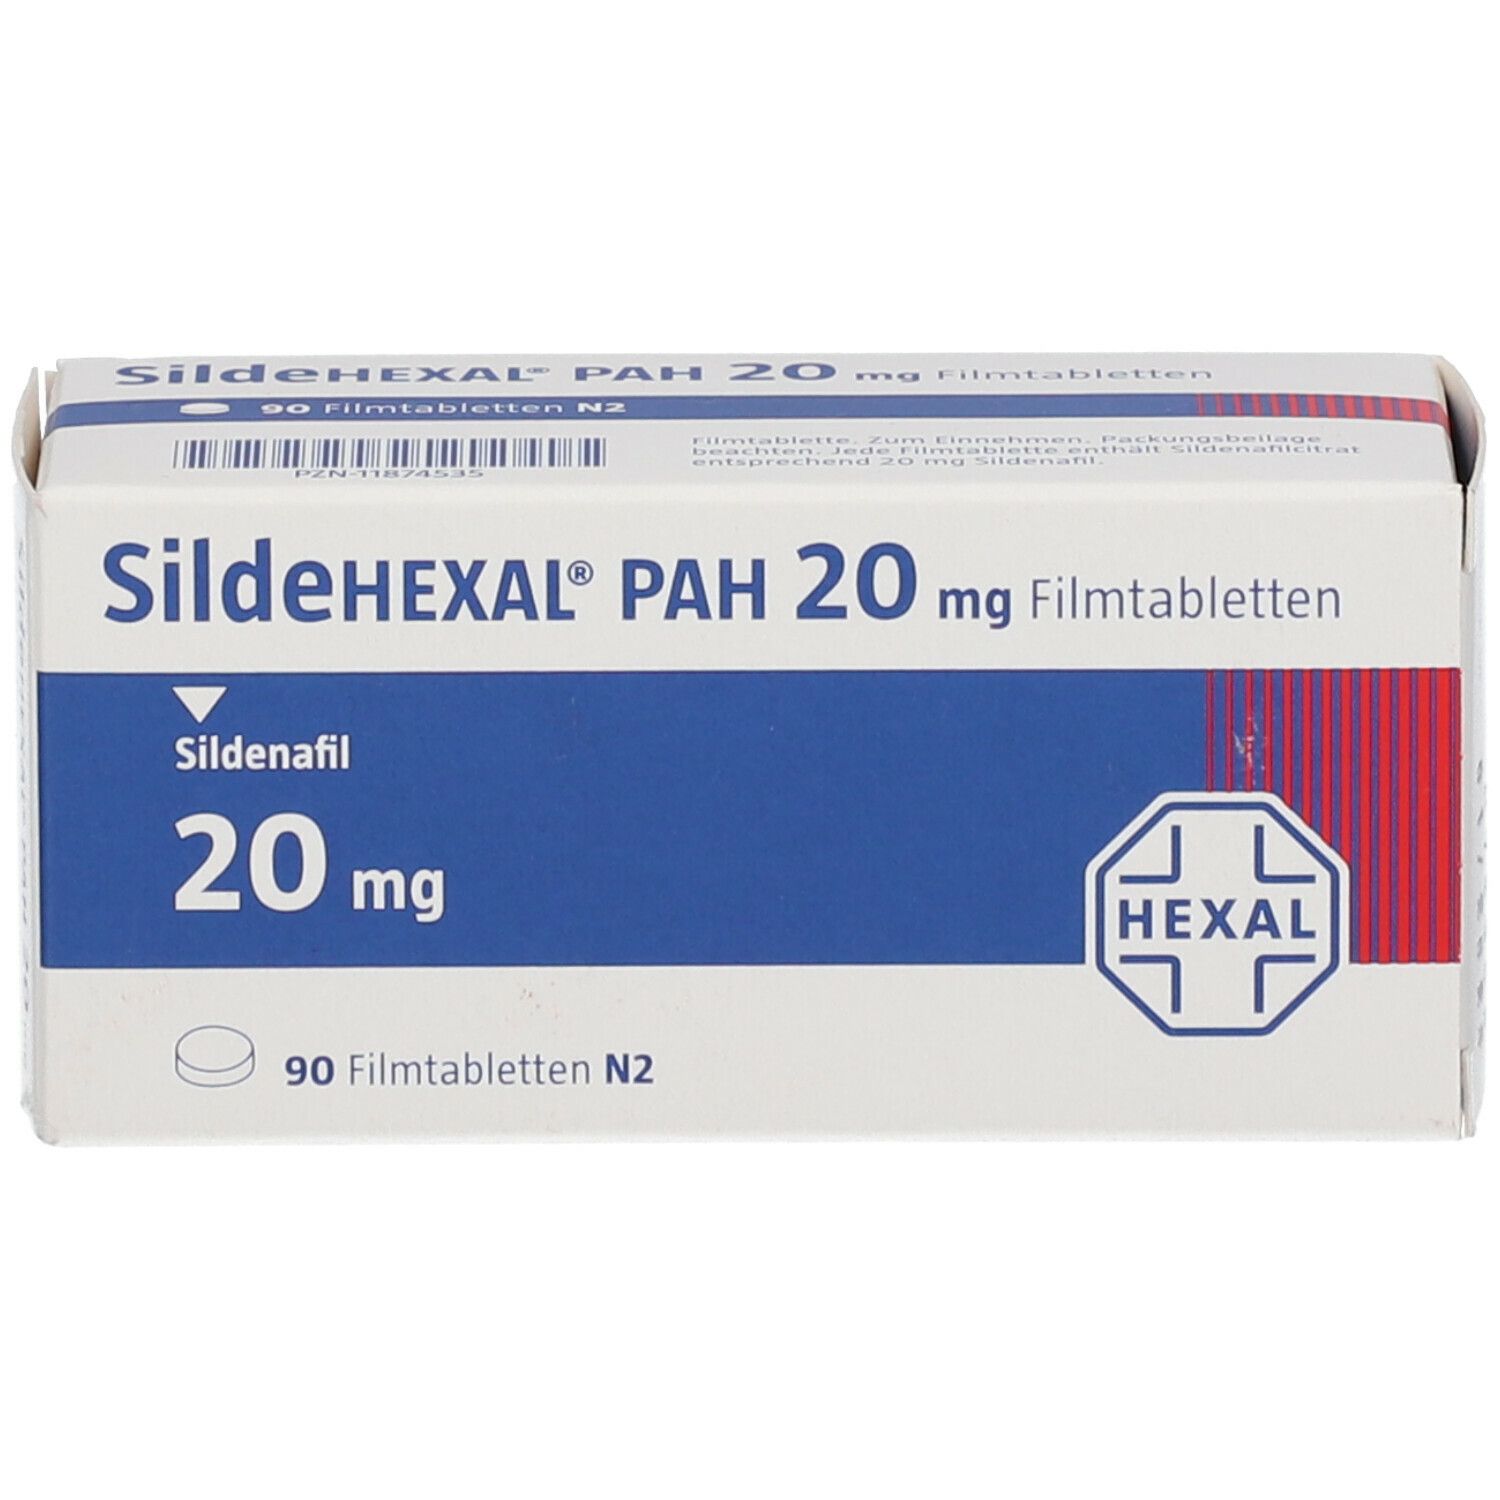 SildeHEXAL® PAH 20 mg